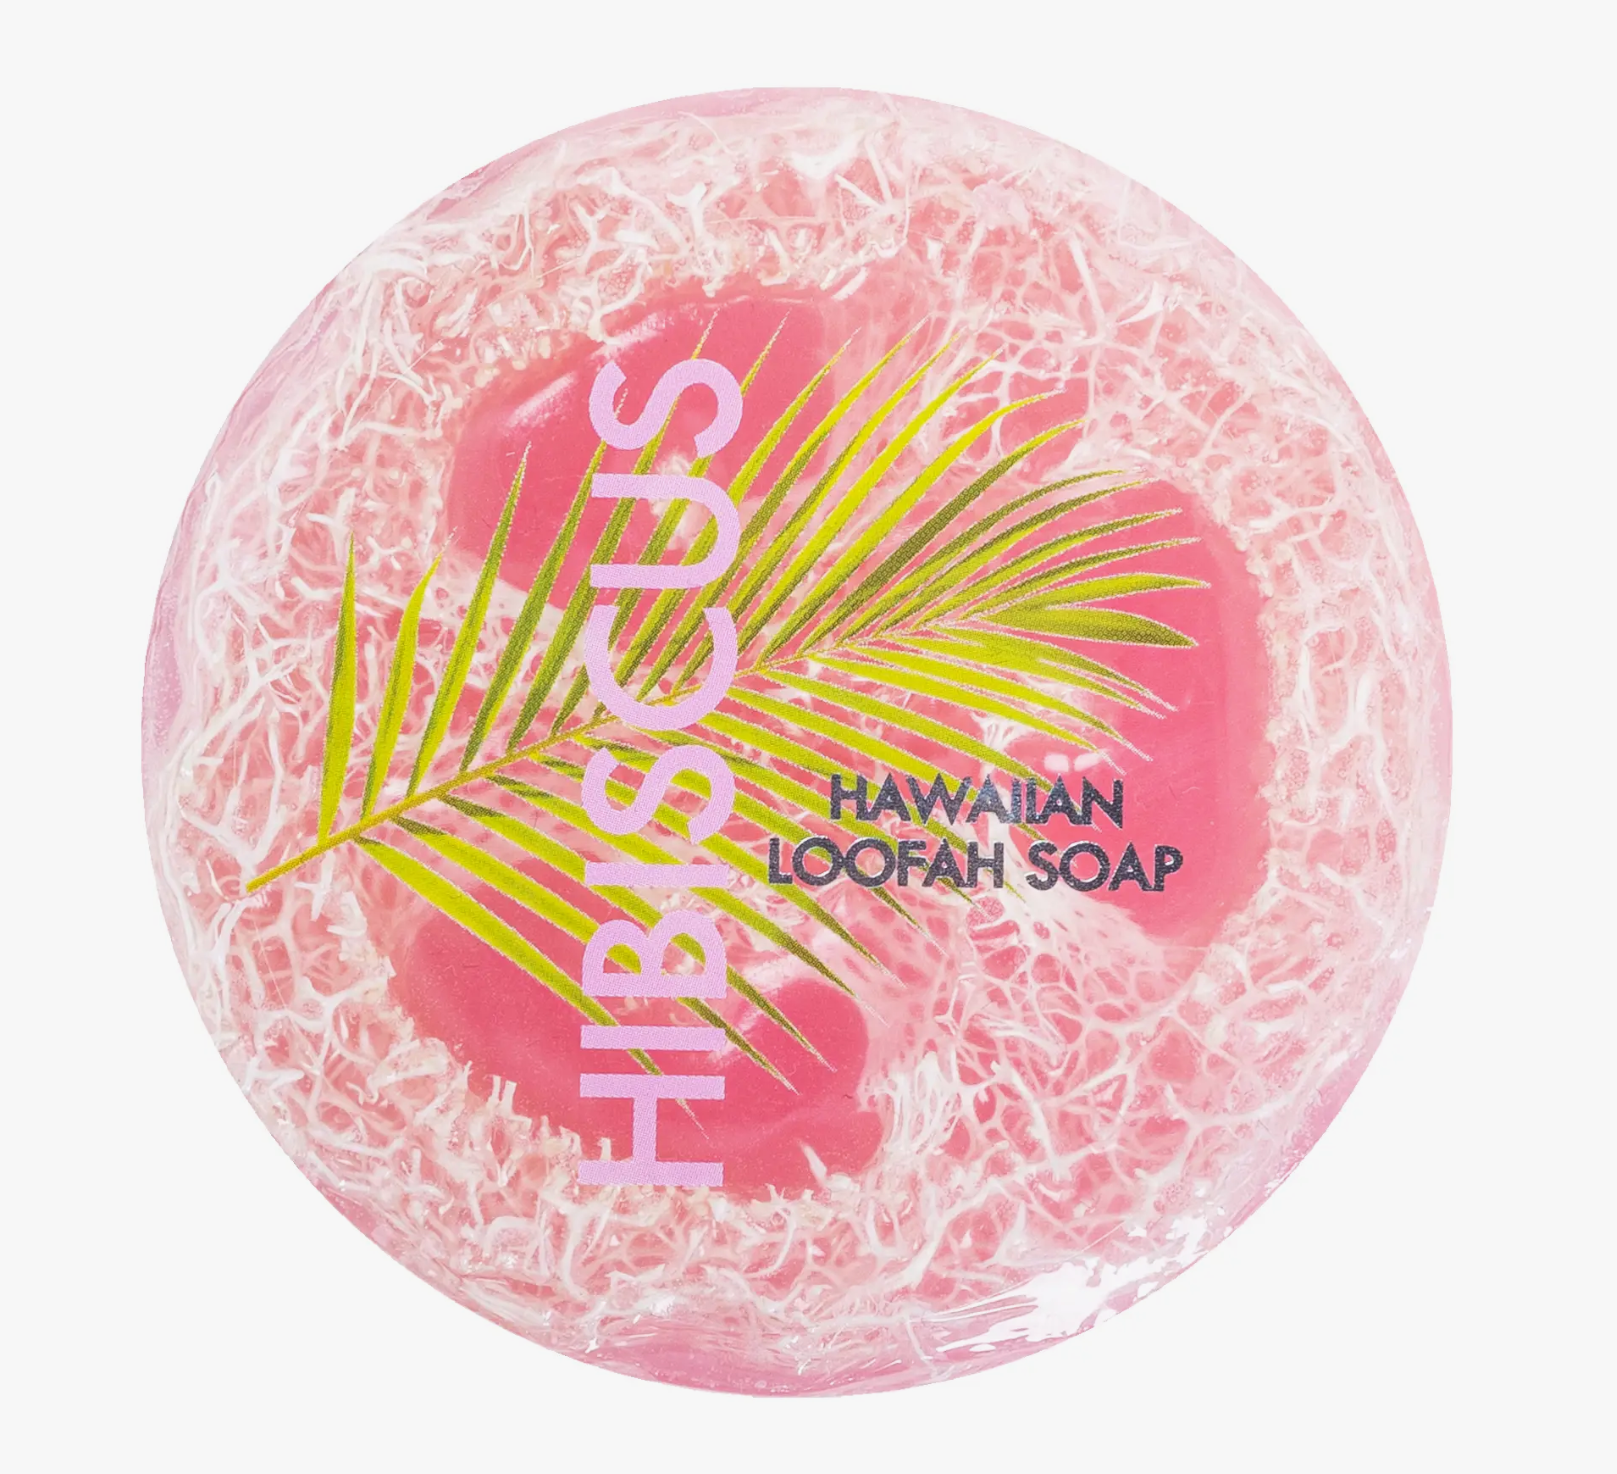 Maui Soap Company Loofah Soap - Hibiscus Sea Salt & Kukui